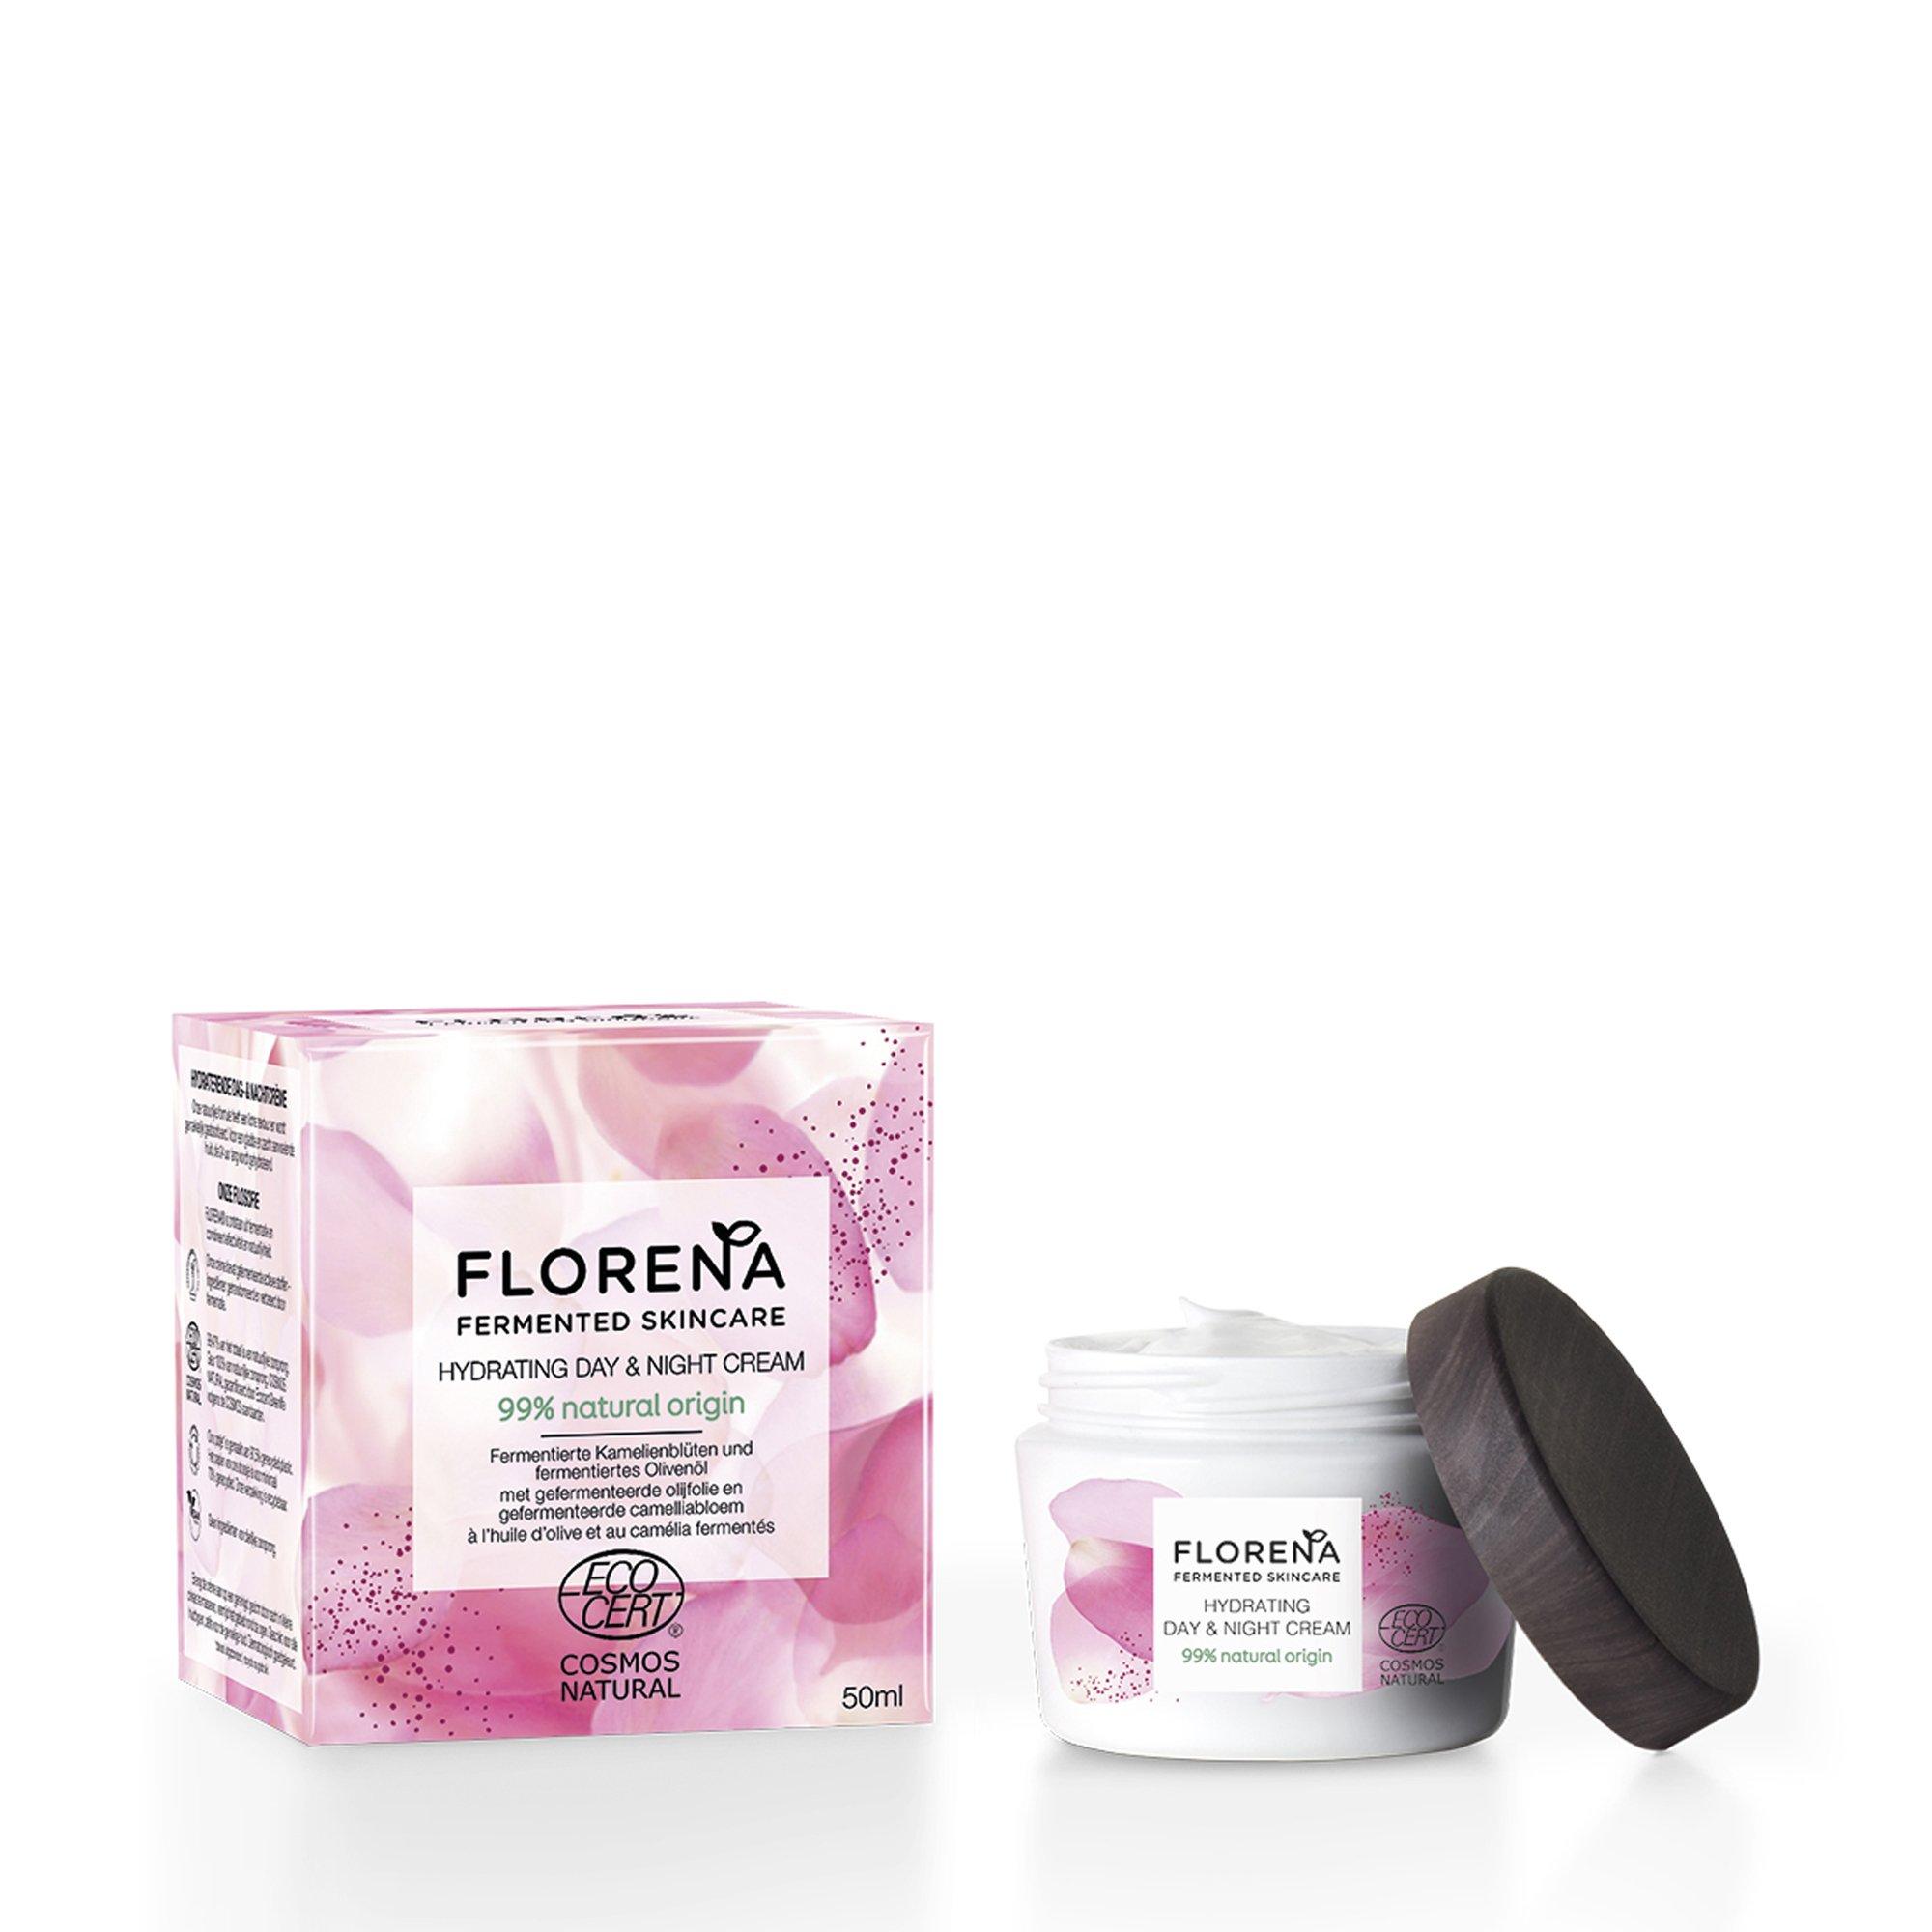 Image of Florena Fermented Skincare Hydrating Day & Night Cream